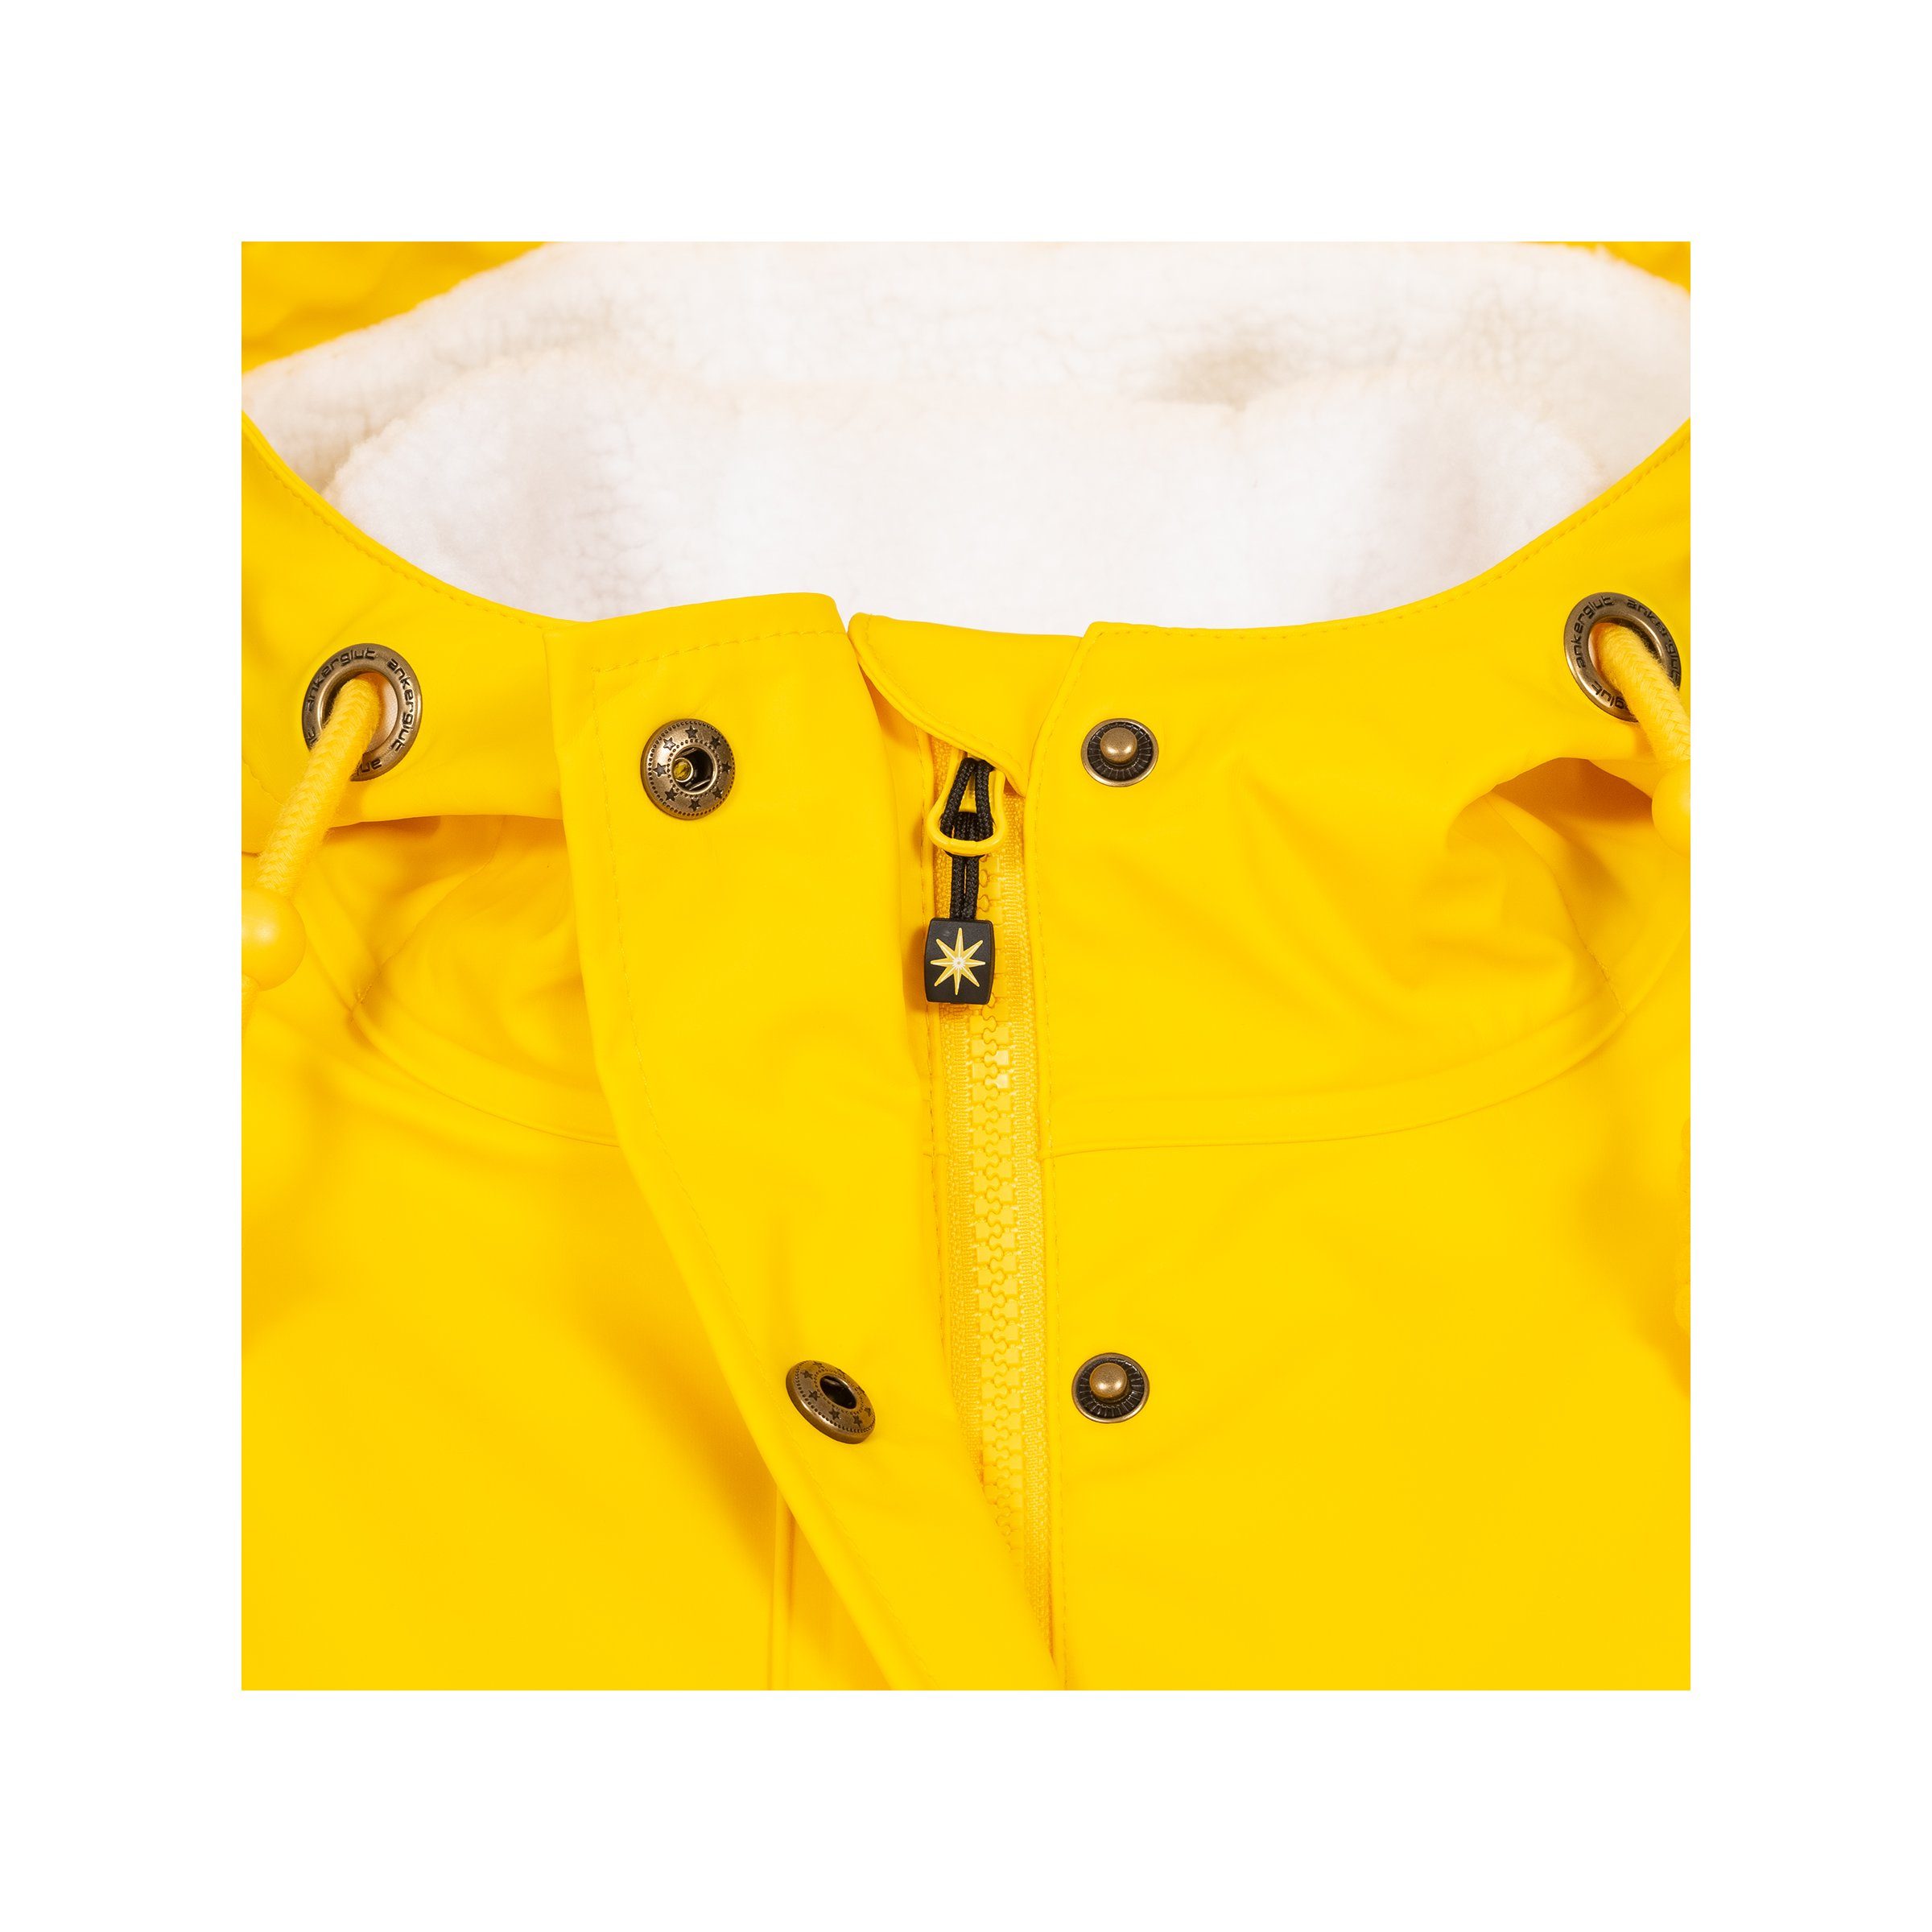 DEPROC Active Regenjacke Regenjacke & Größen yellow erhältlich Longjacket #ankergluttraum auch WOMEN Großen CS in NEW ANKERGLUT